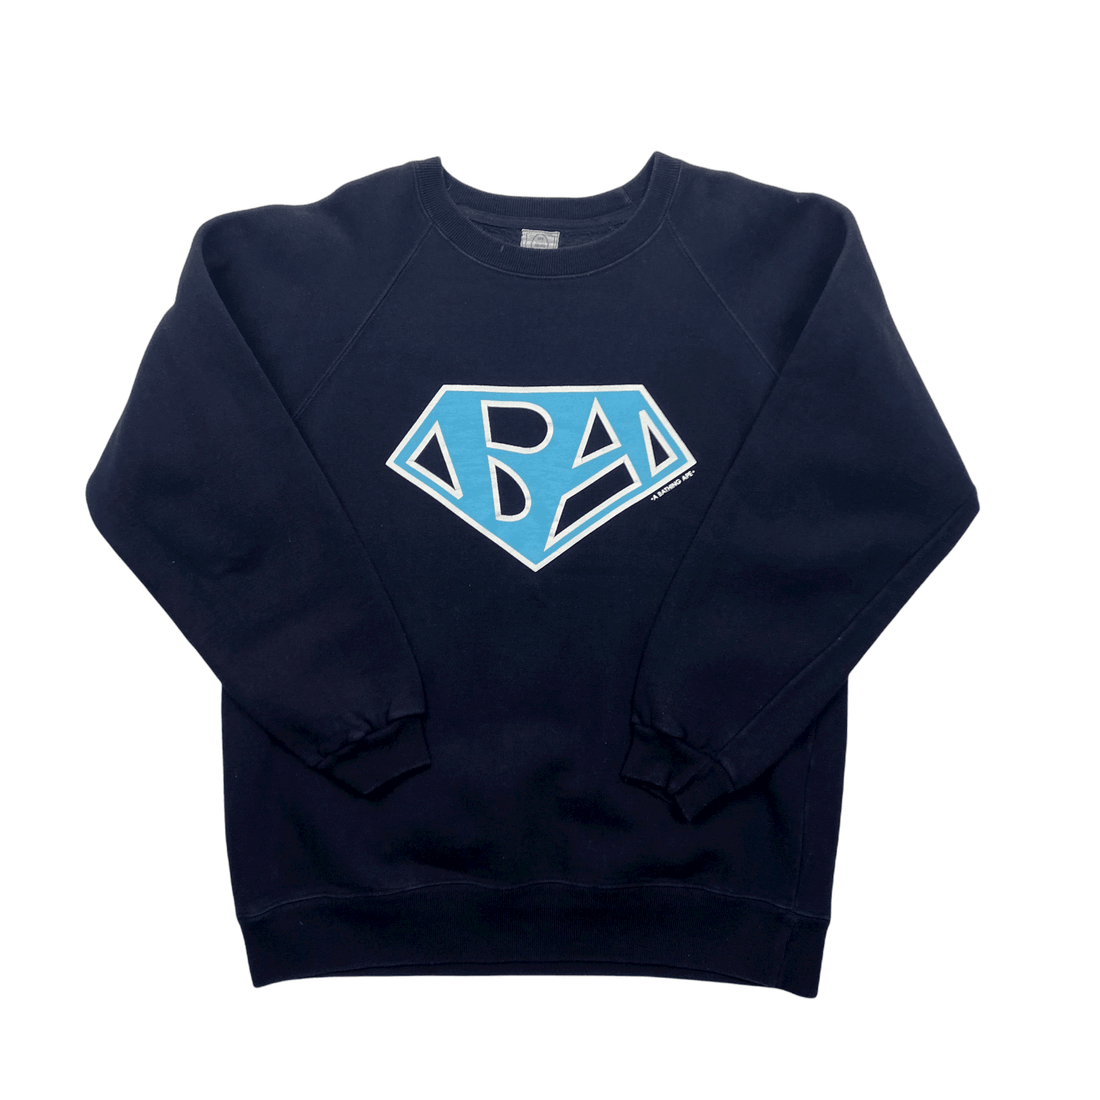 Vintage Navy Blue A Bathing Ape (BAPE) Superman Sweatshirt - Large - The Streetwear Studio